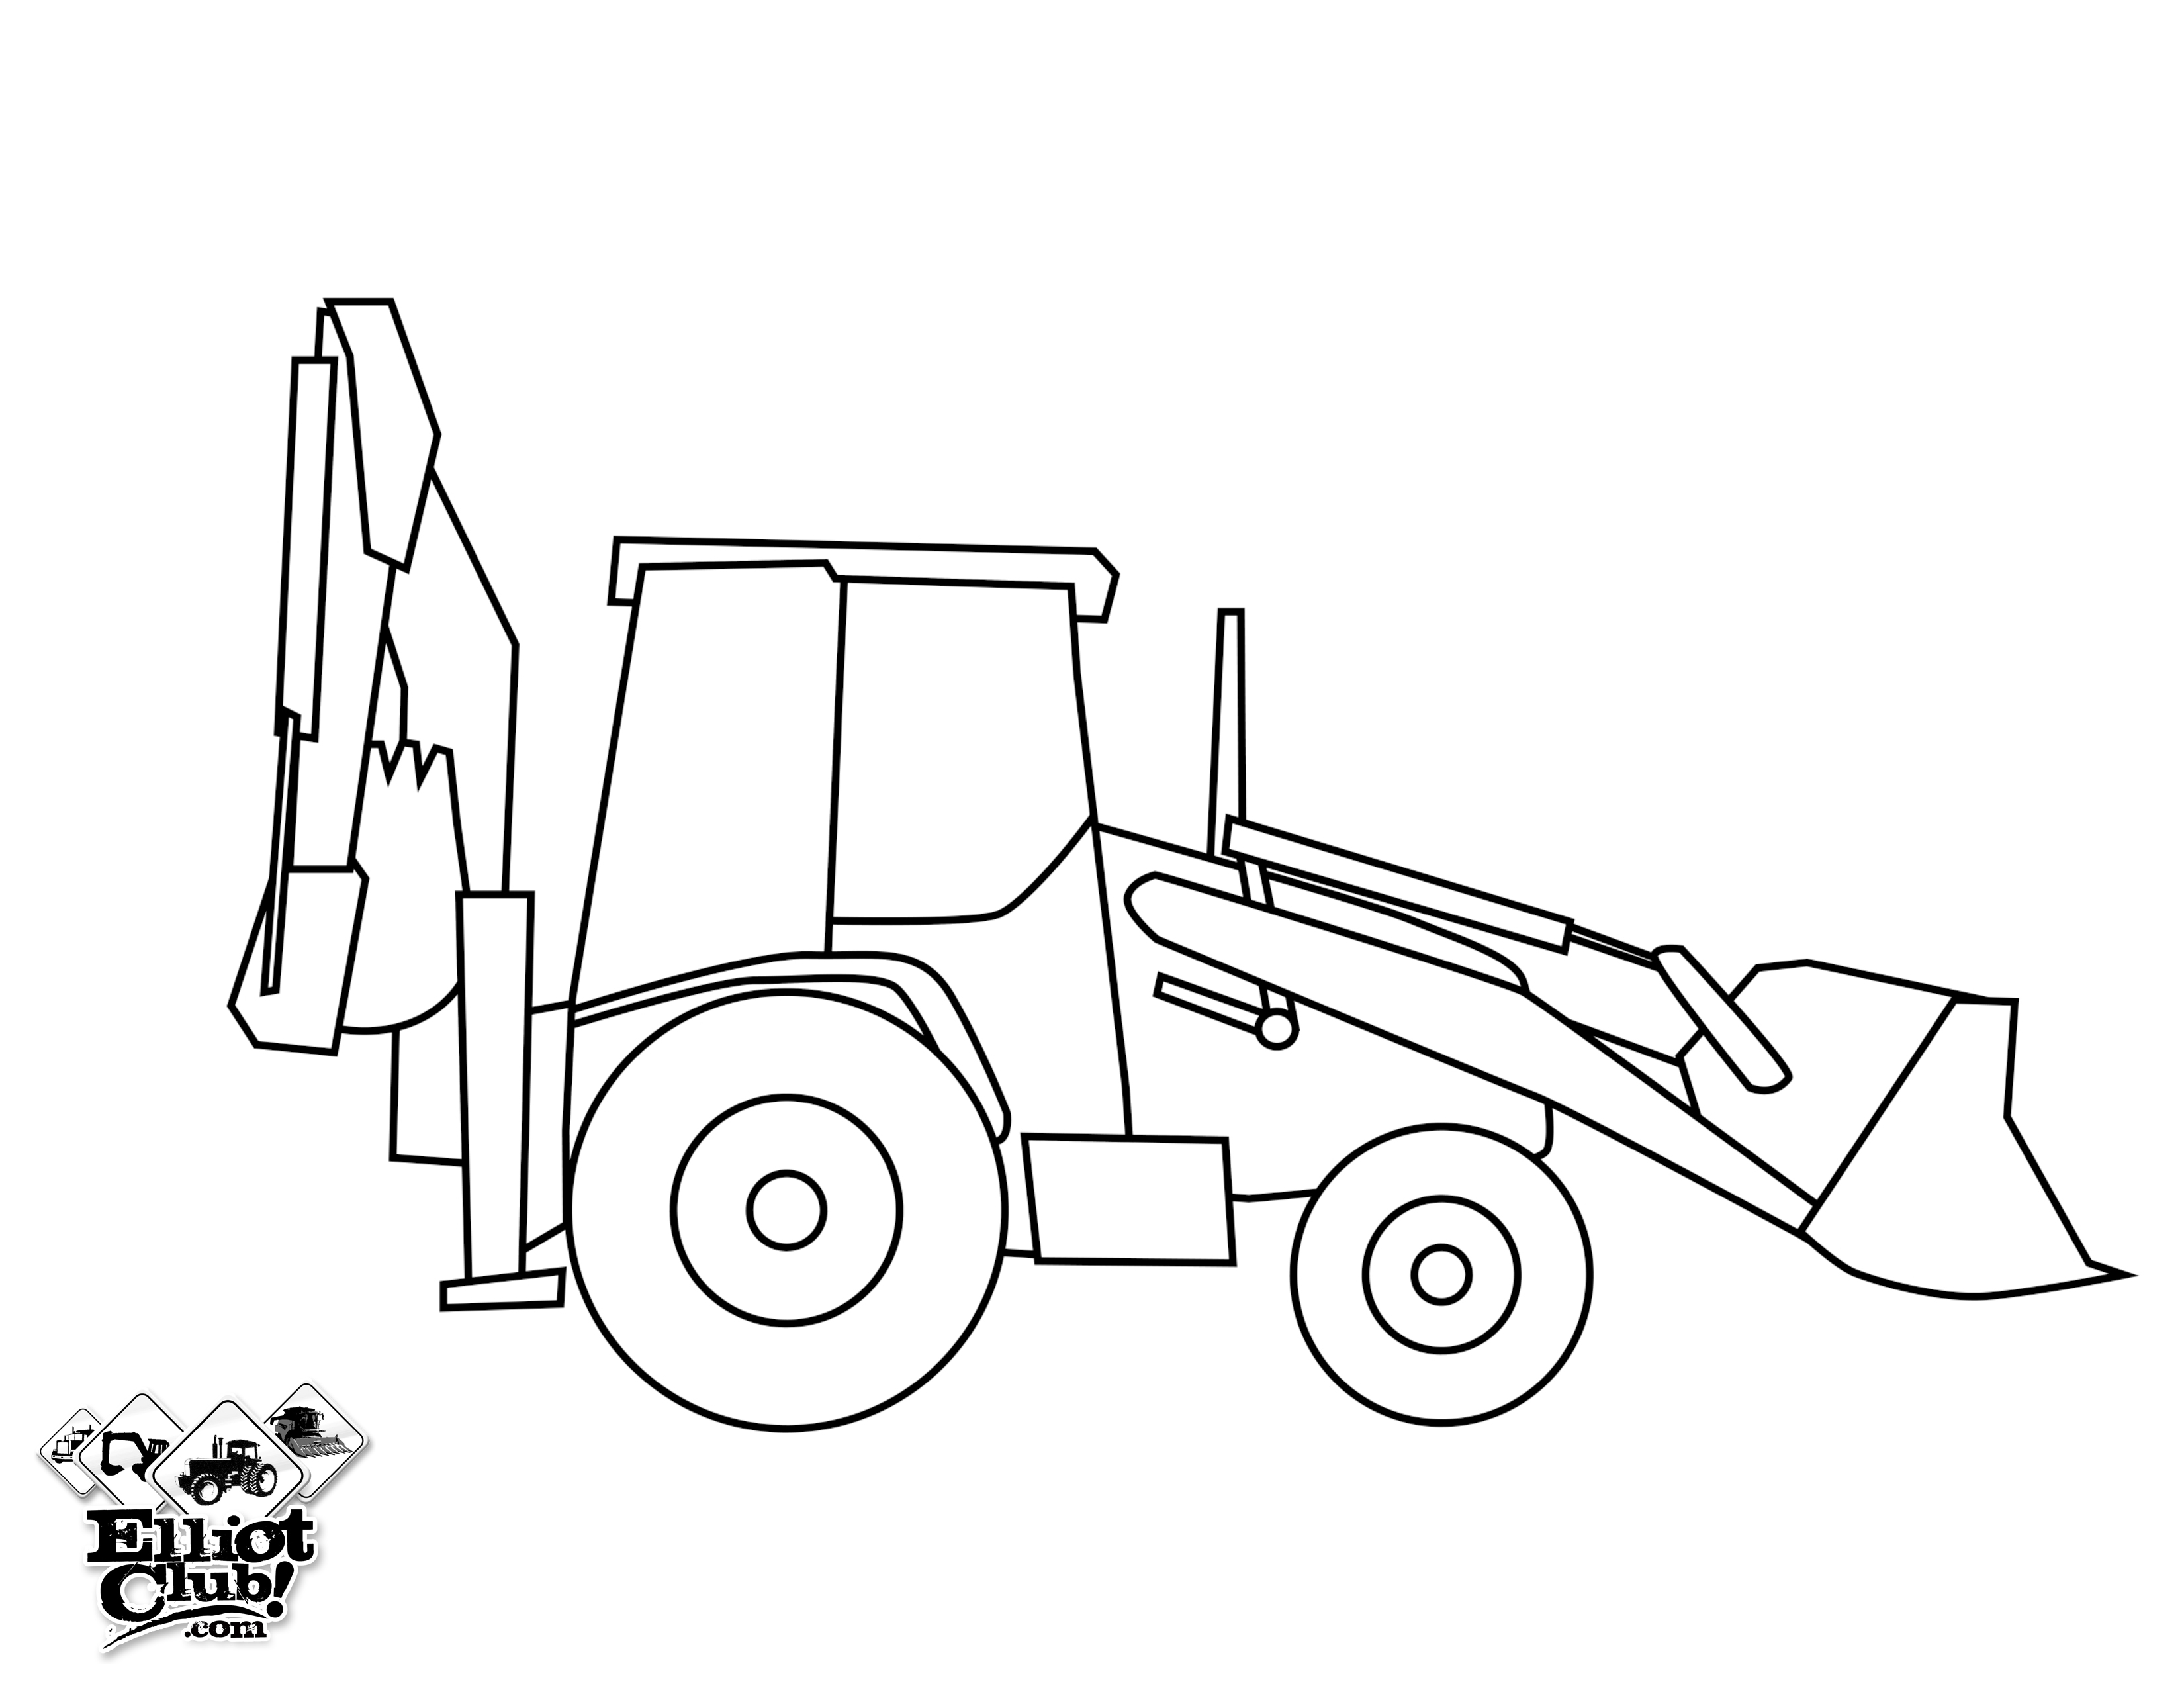 Download Bulldozer / Mecanic Shovel (Transportation) - Printable coloring pages